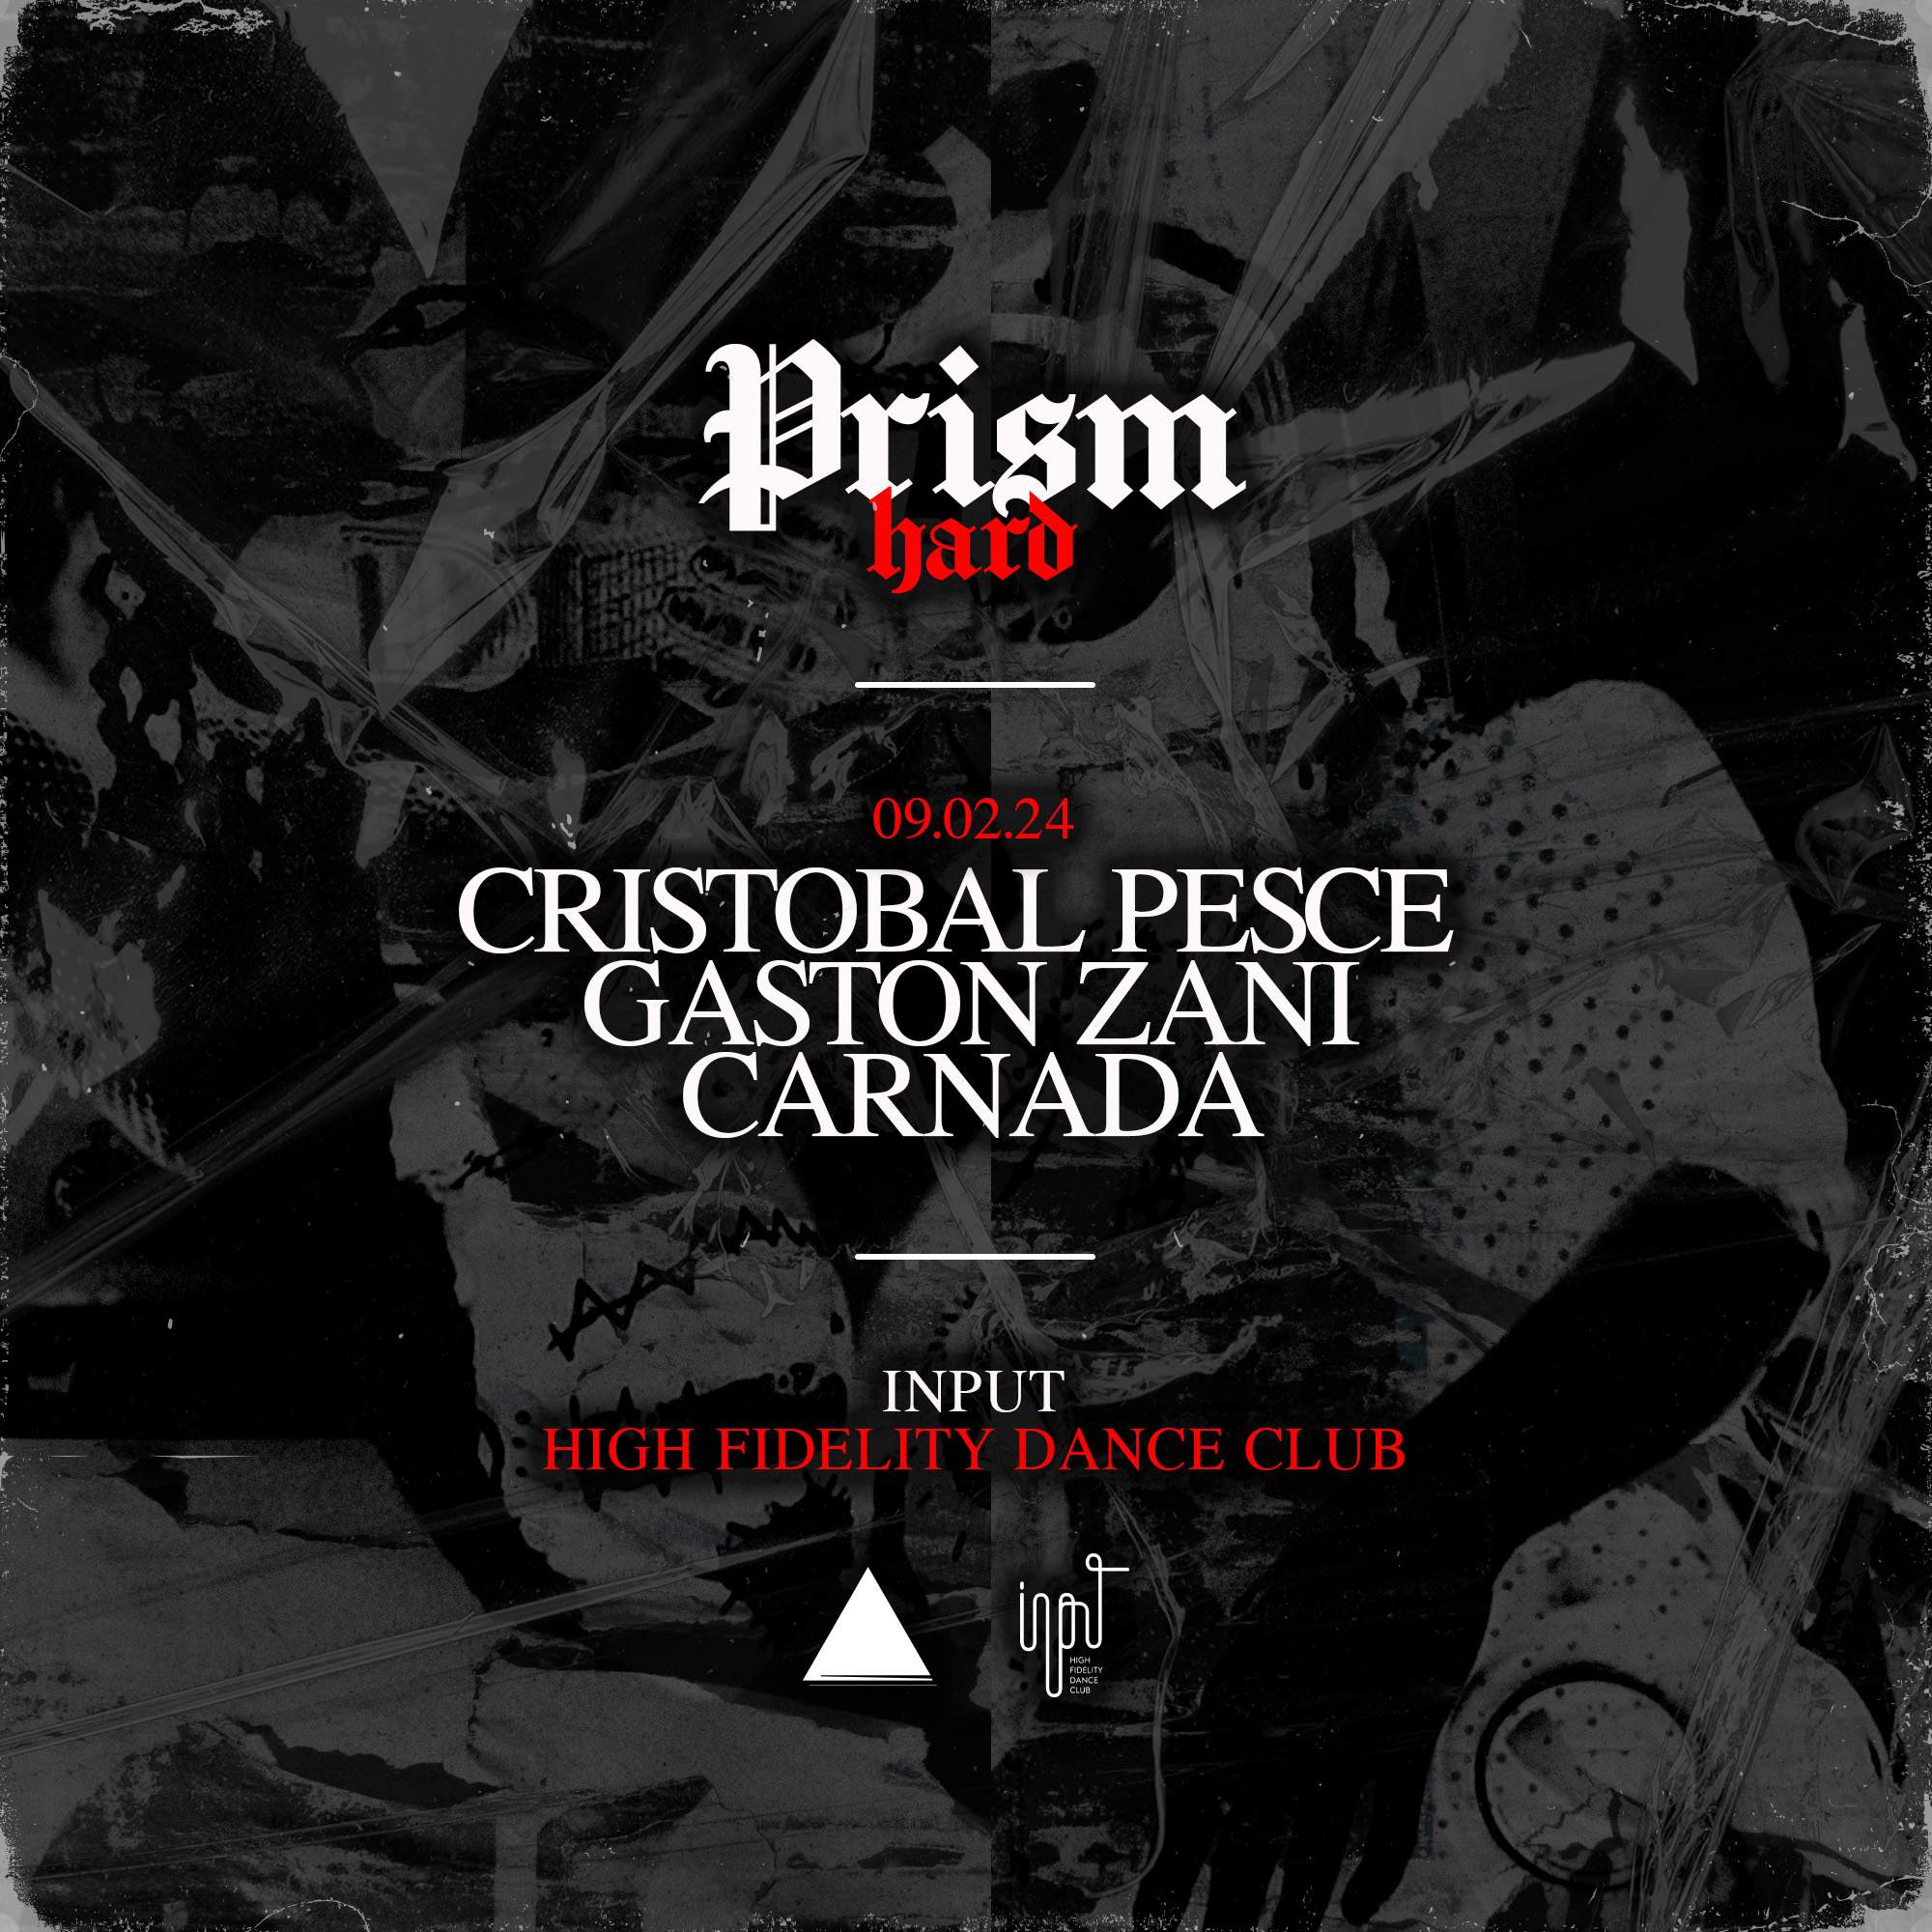 PRISM pres CRISTOBAL PESCE - フライヤー表